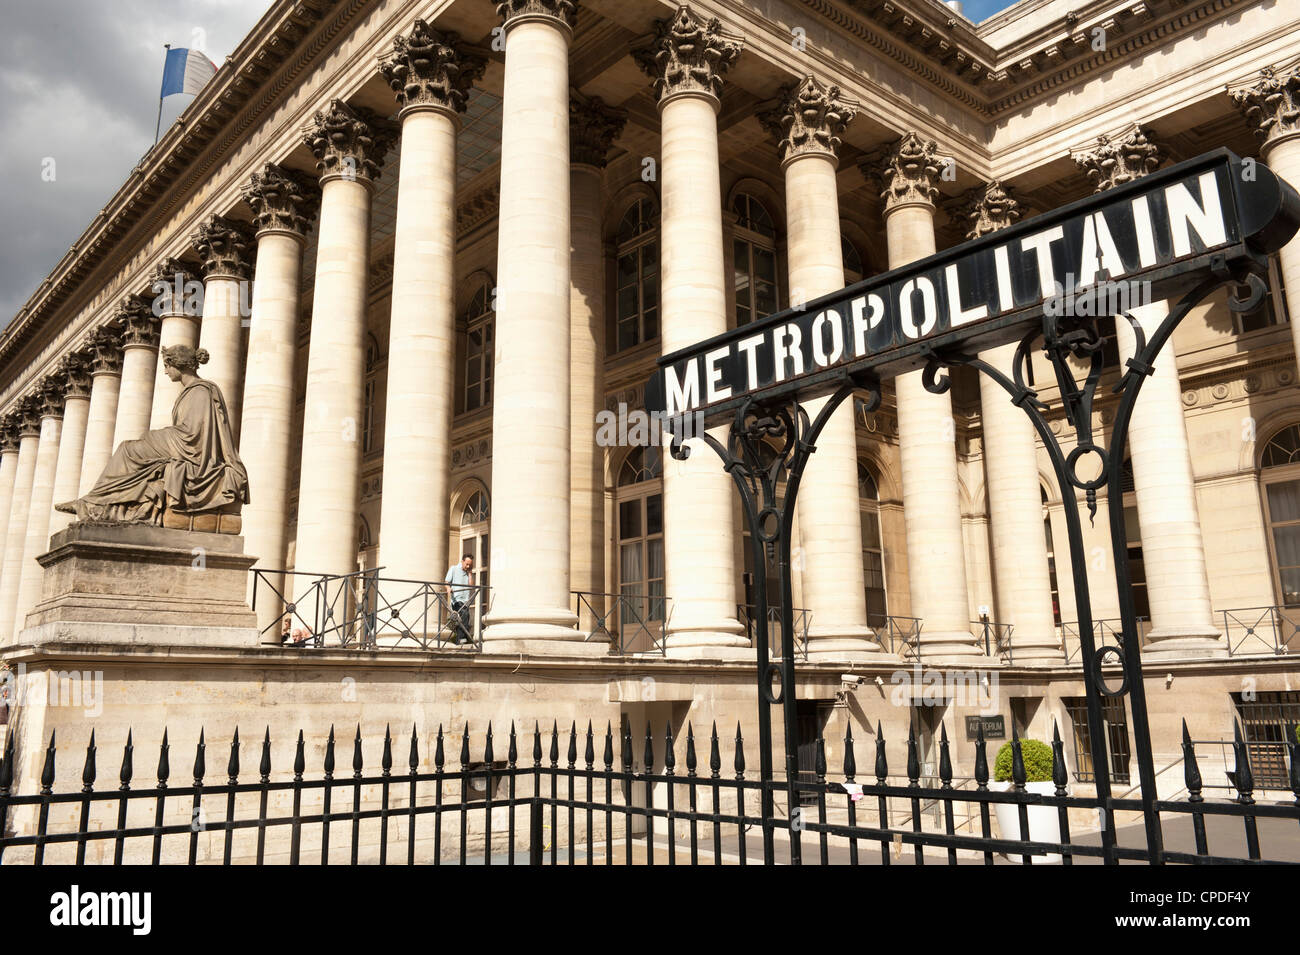 Stock Exchange (La Bourse) e metropolitana segno in ingresso al metro Place de la Bourse, Parigi, Francia, Europa Foto Stock